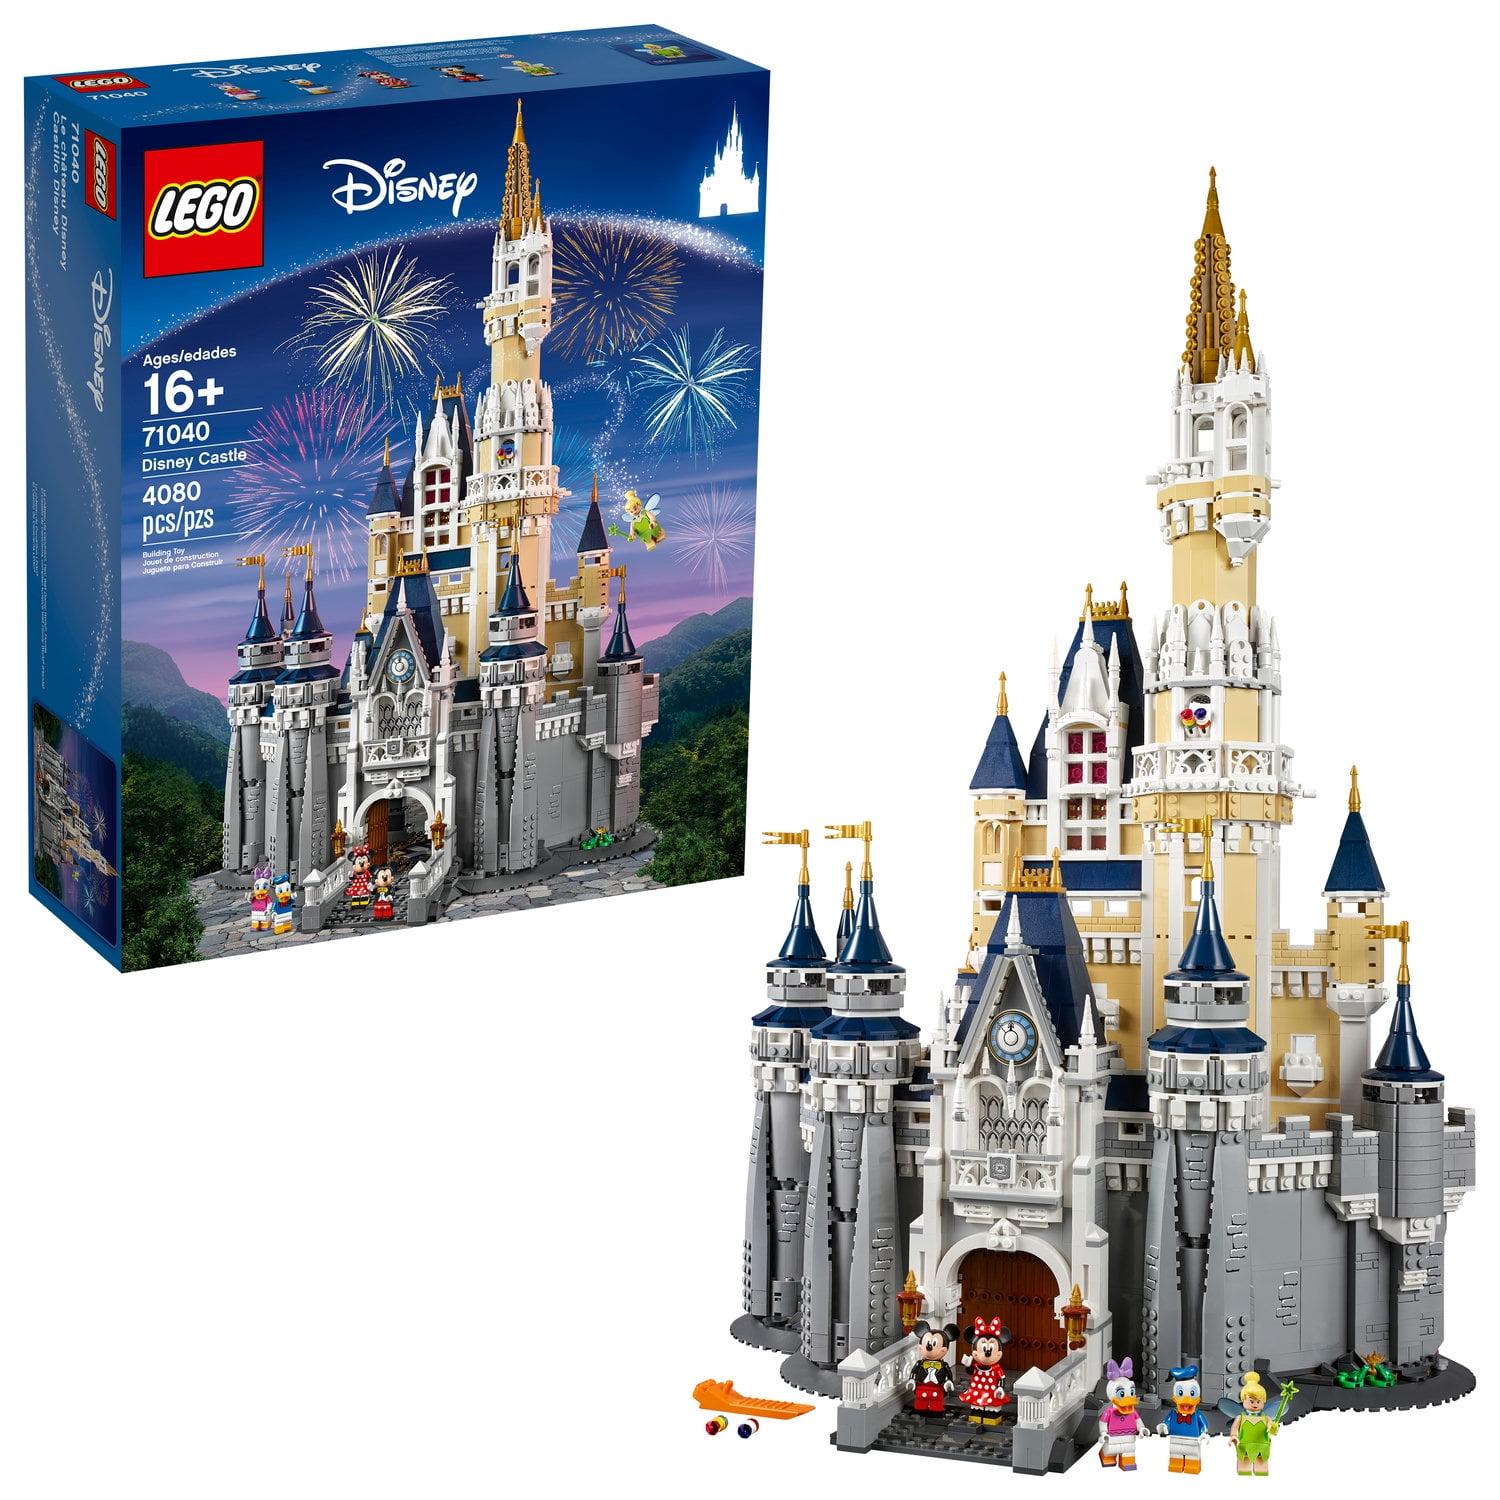 71040 LEGO Disney Princess The Disney Castle 